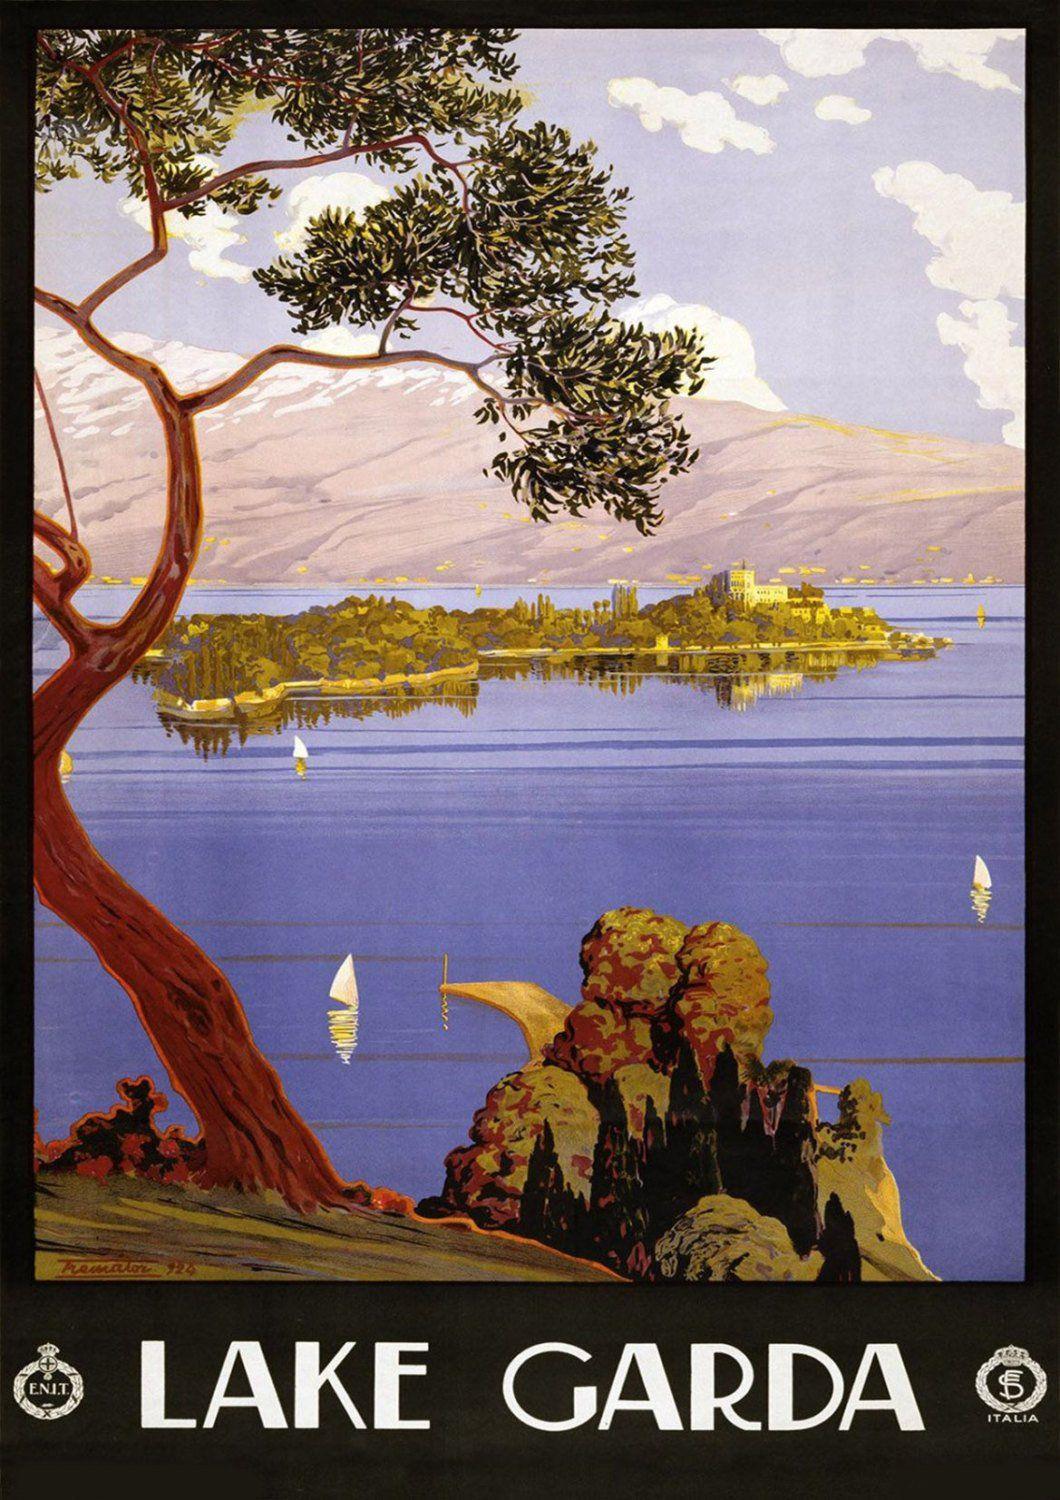 LAKE GARDA POSTER: Vintage Italian Lake Travel Advert - Pimlico Prints